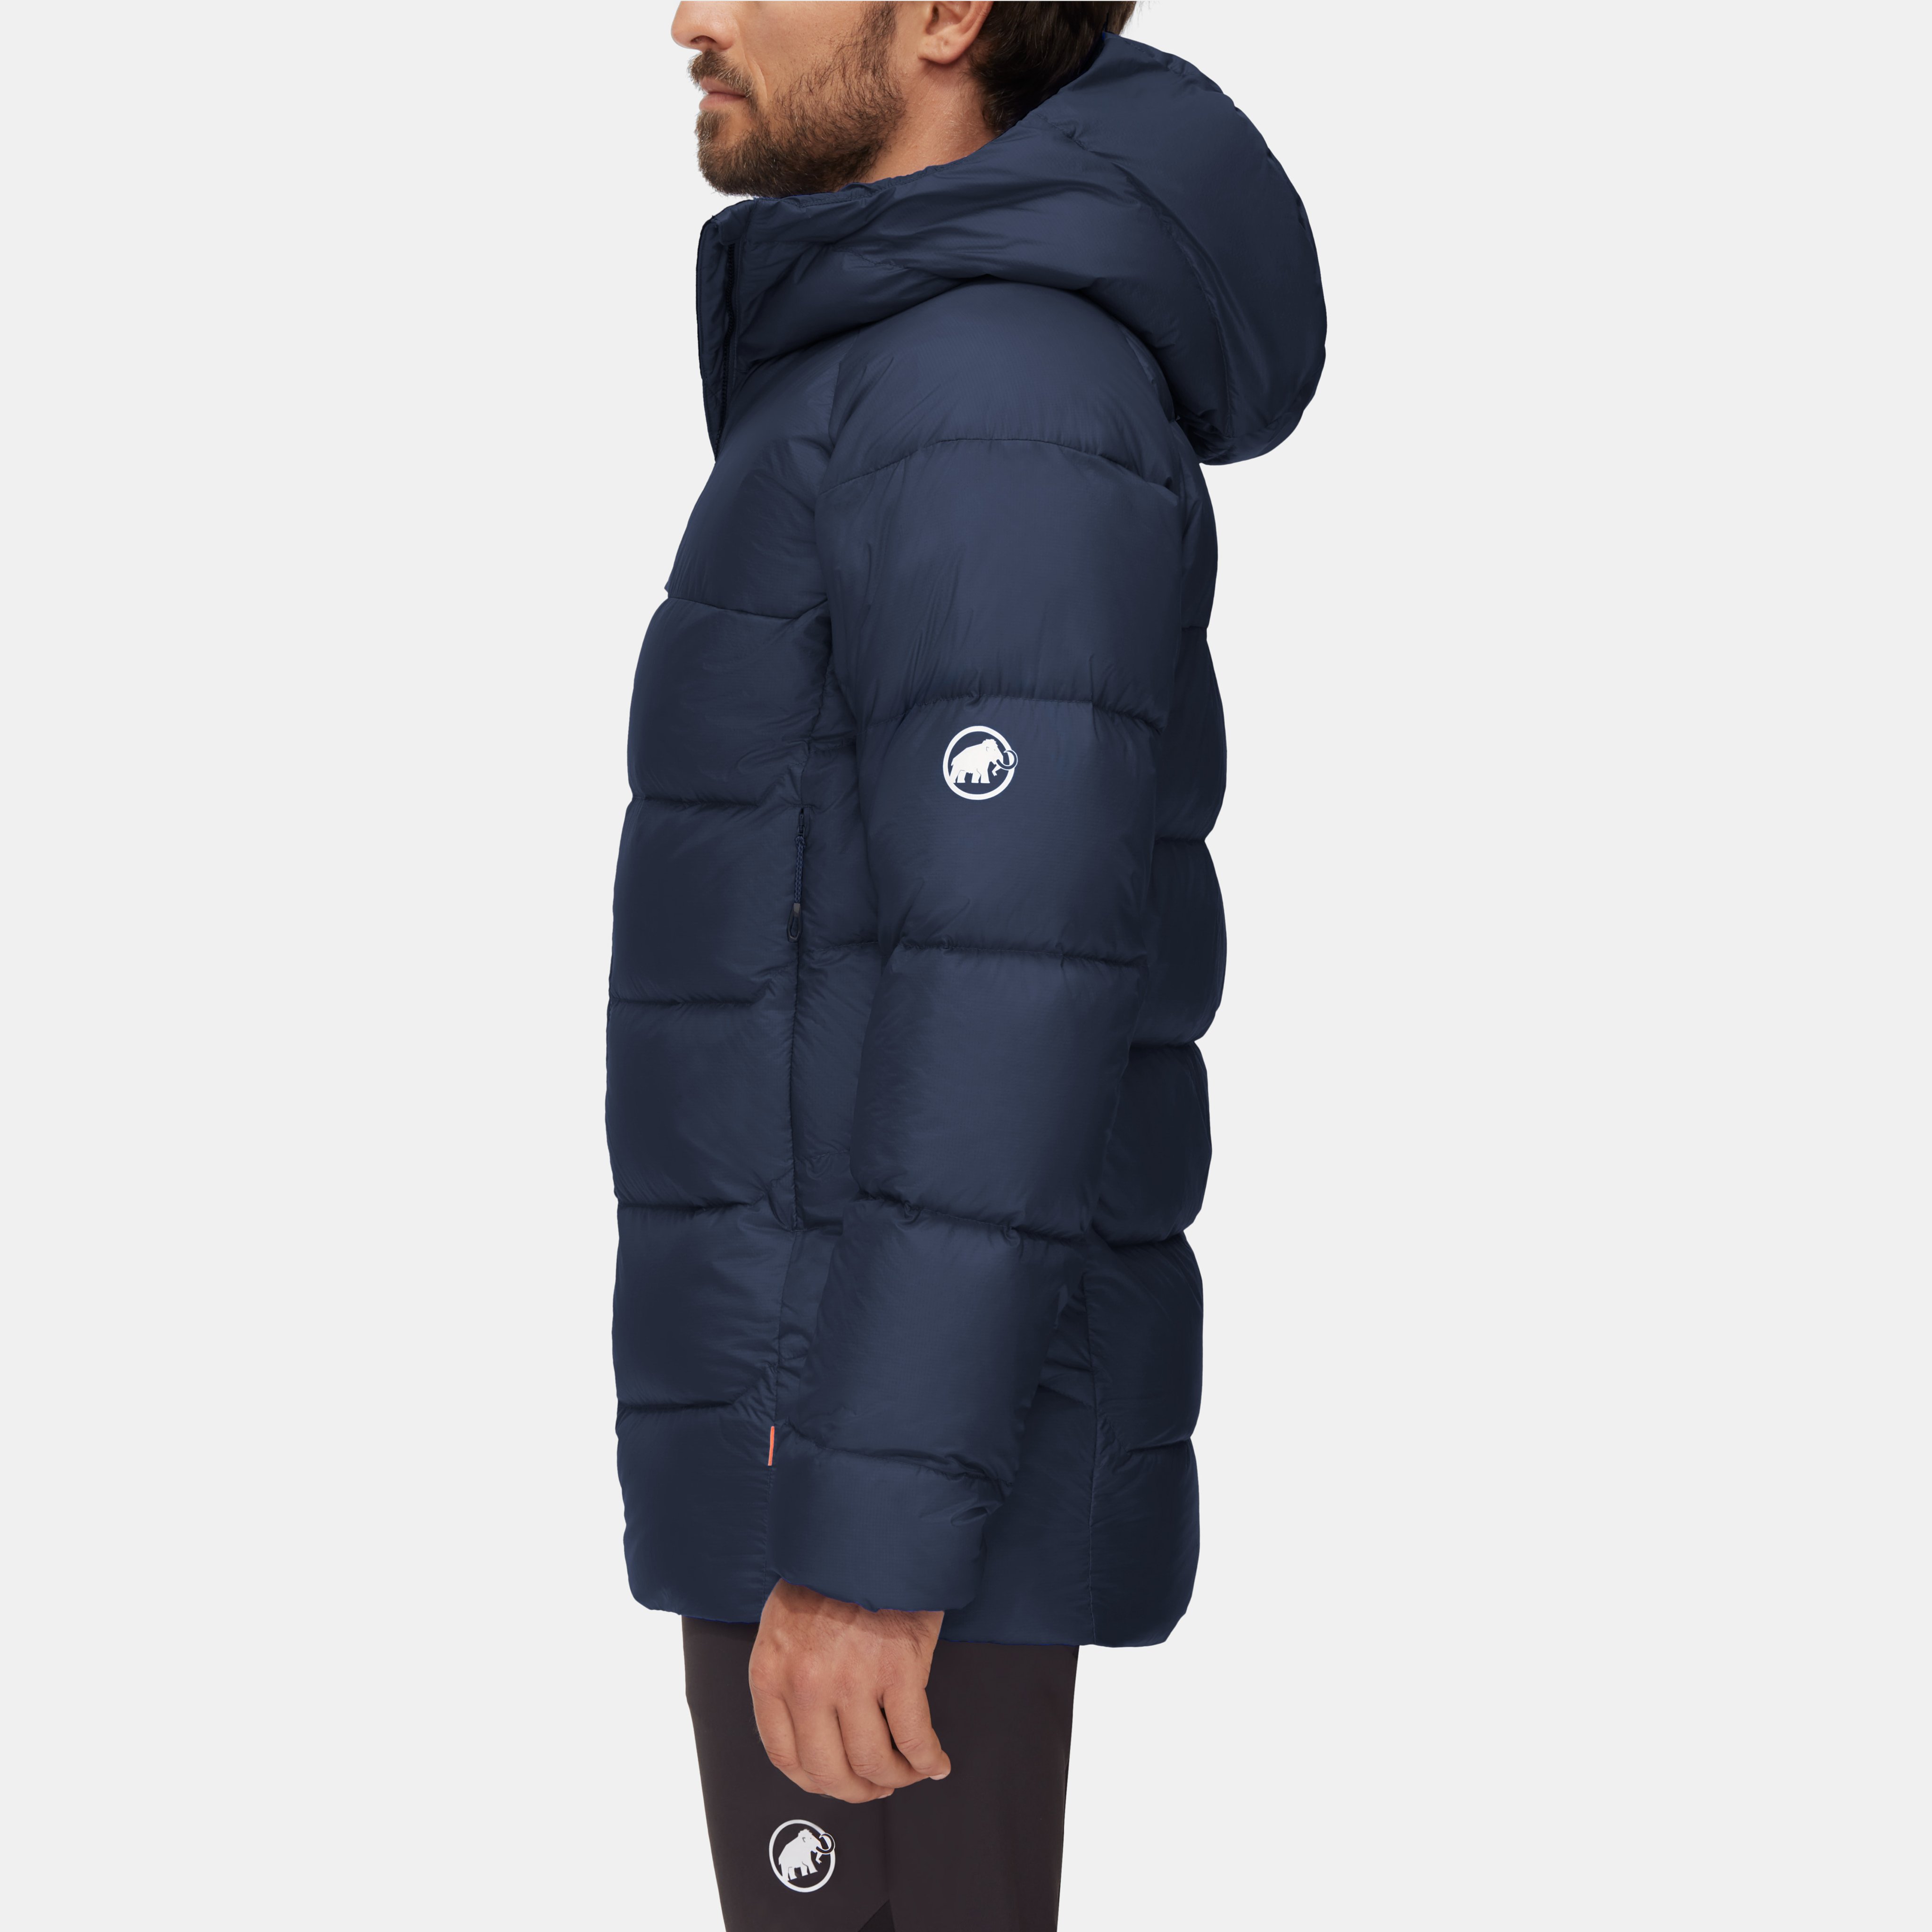 Meron IN Hooded Jacket Men product image